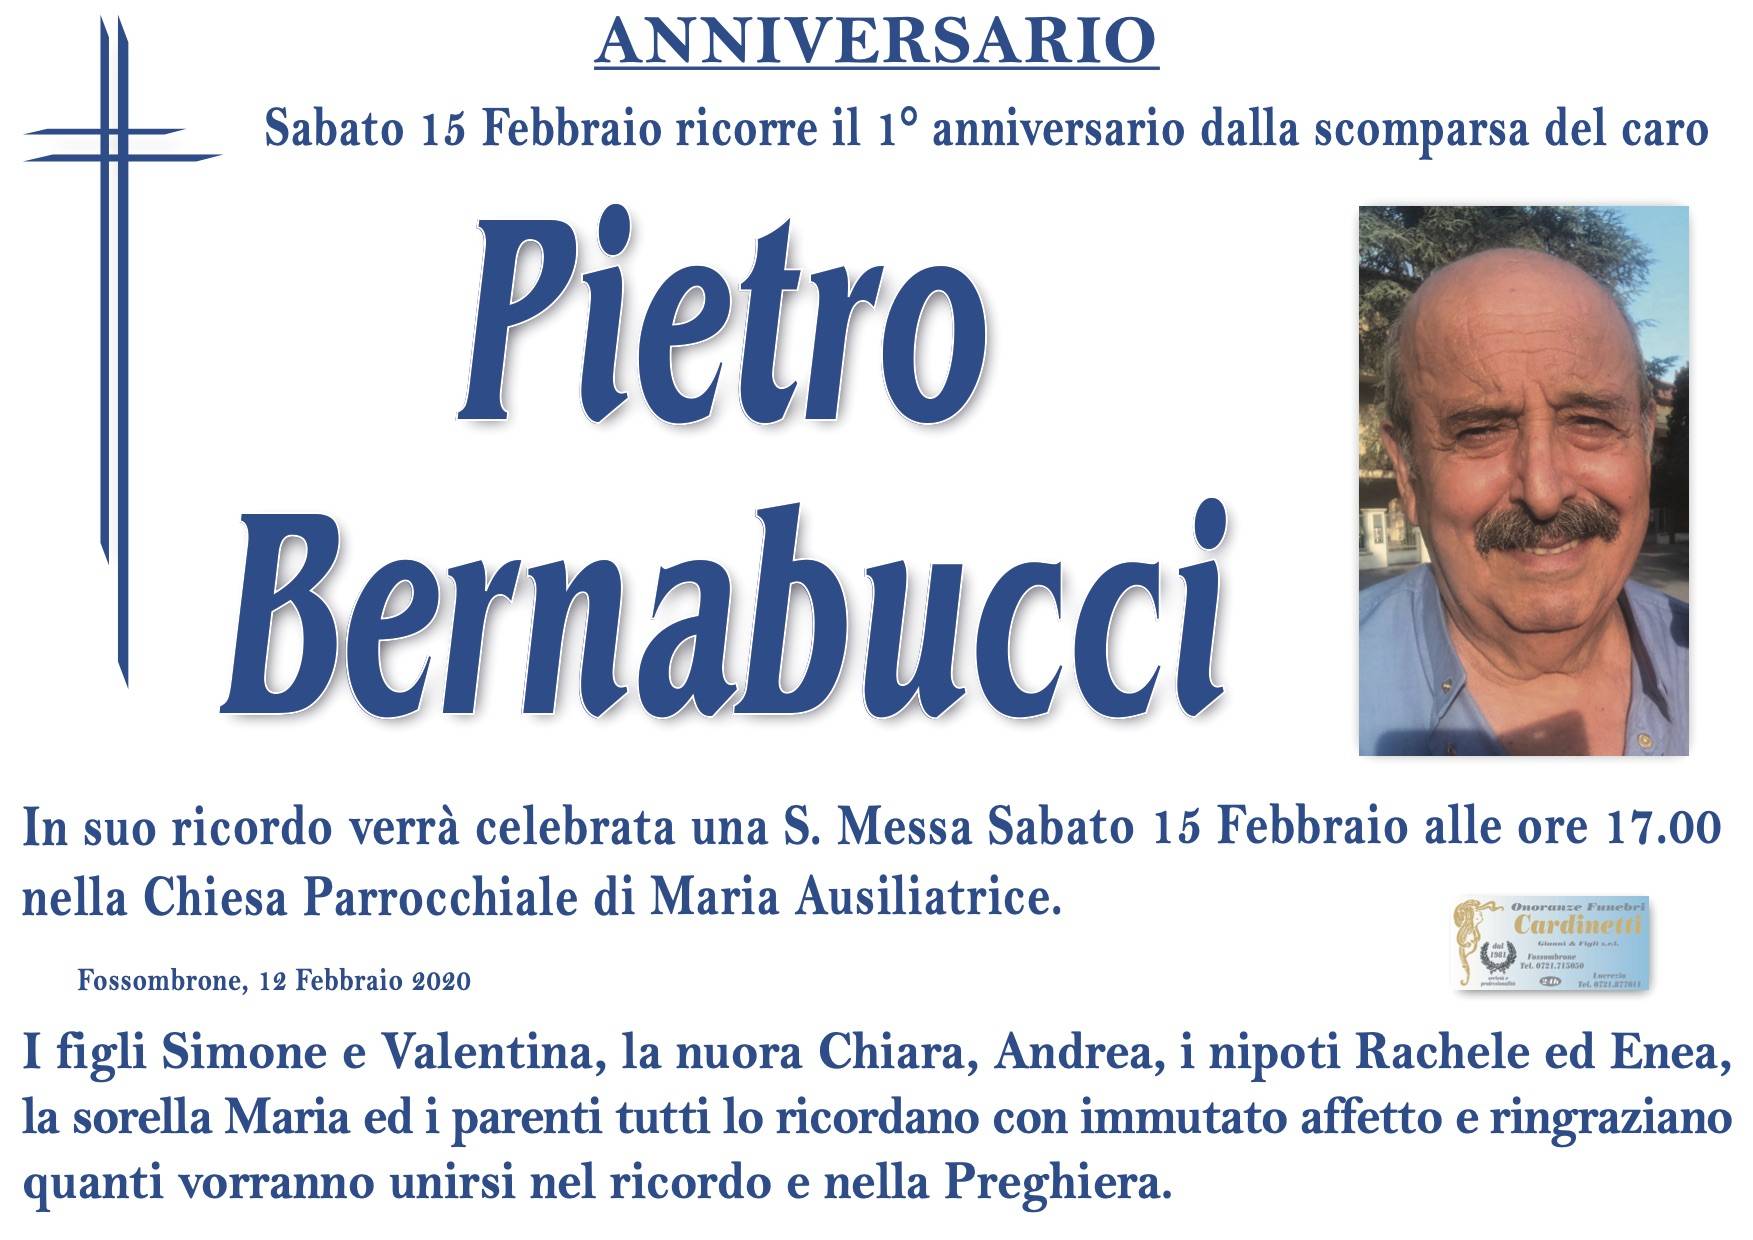 Pietro Bernabucci